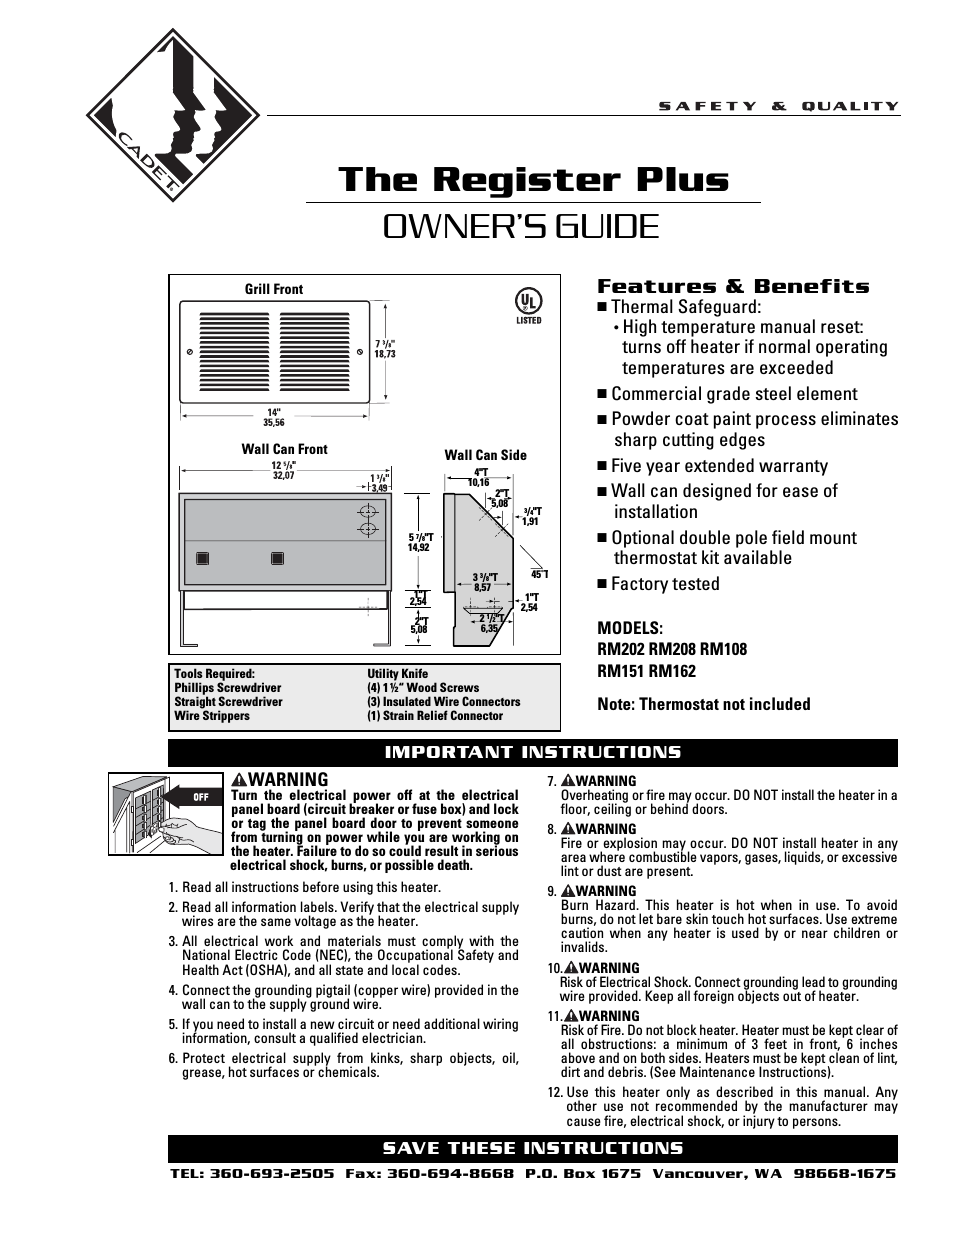 The Register Plus RM208